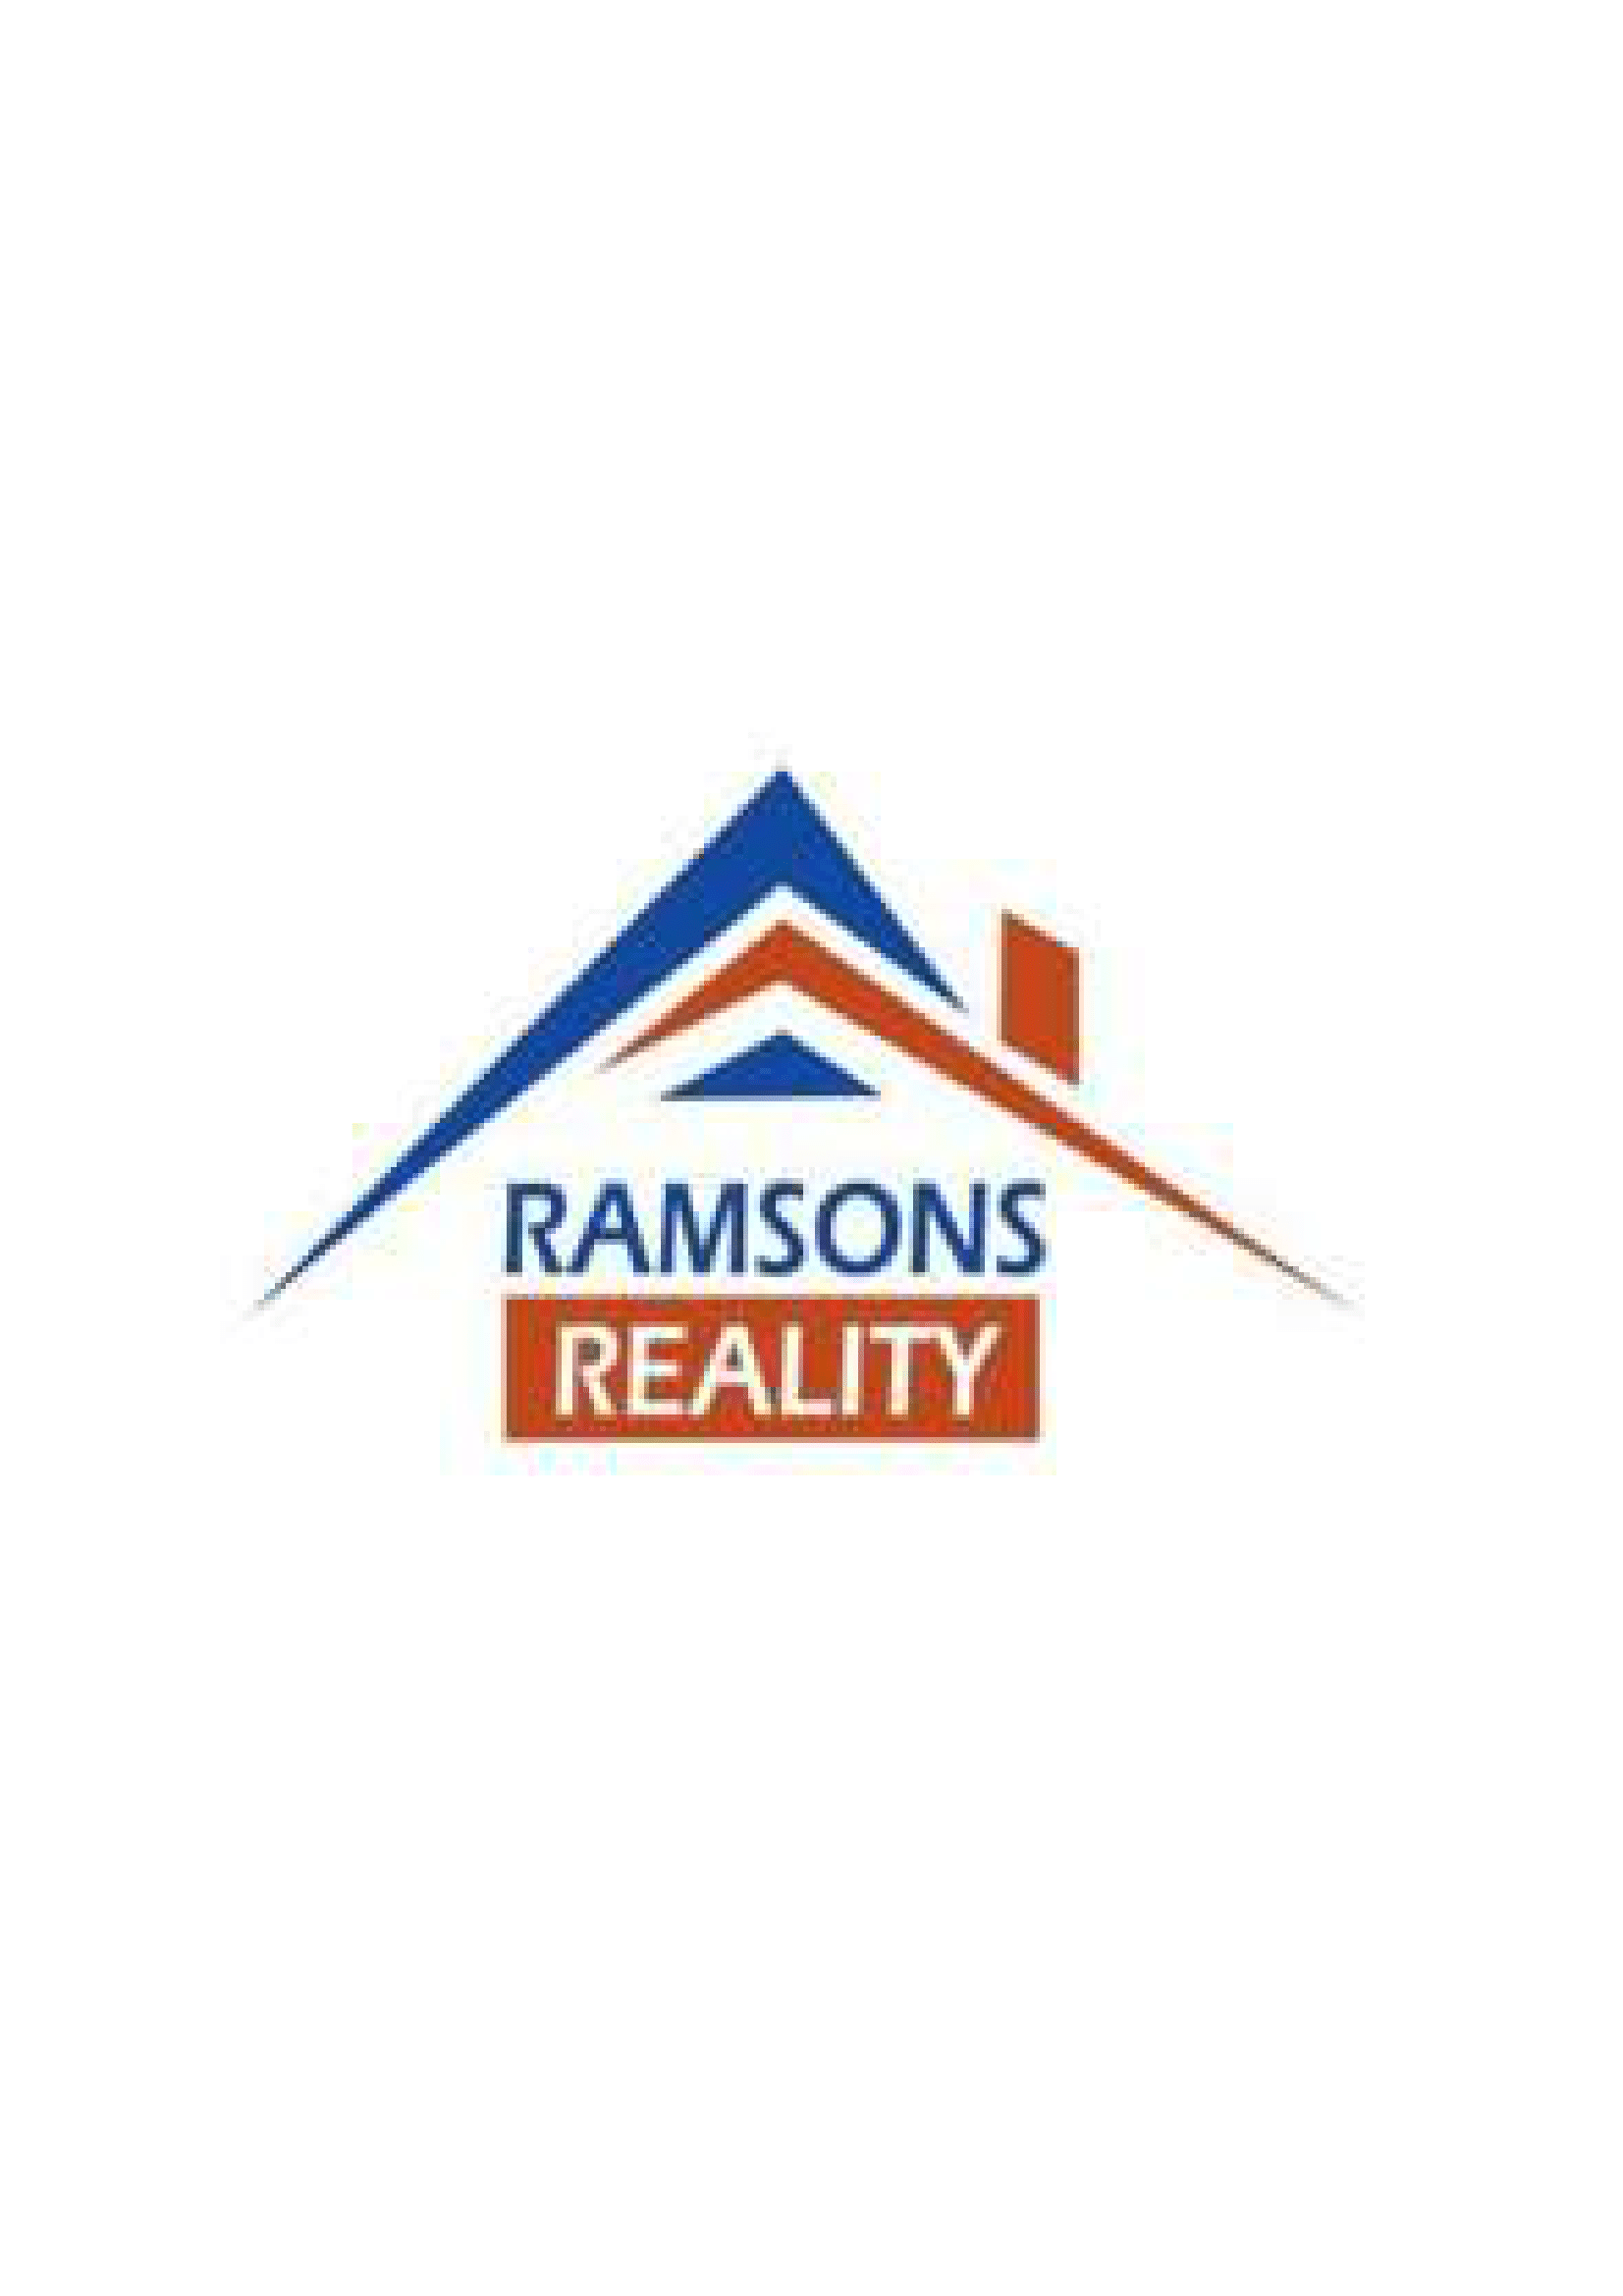 Rasmons Reality